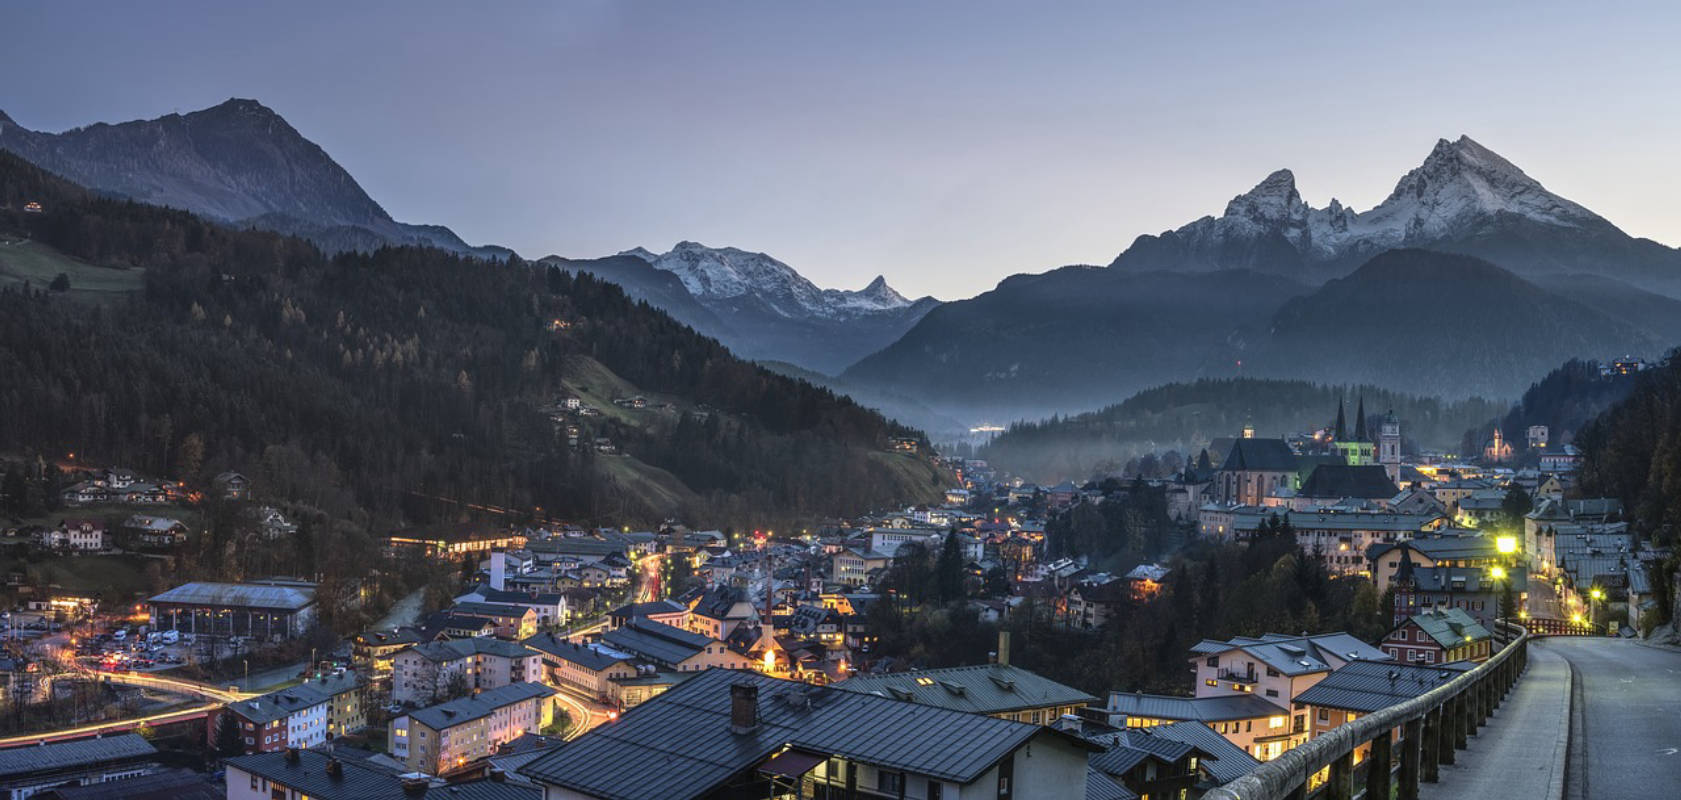 Berchtesgaden Alps - A possible pitch?